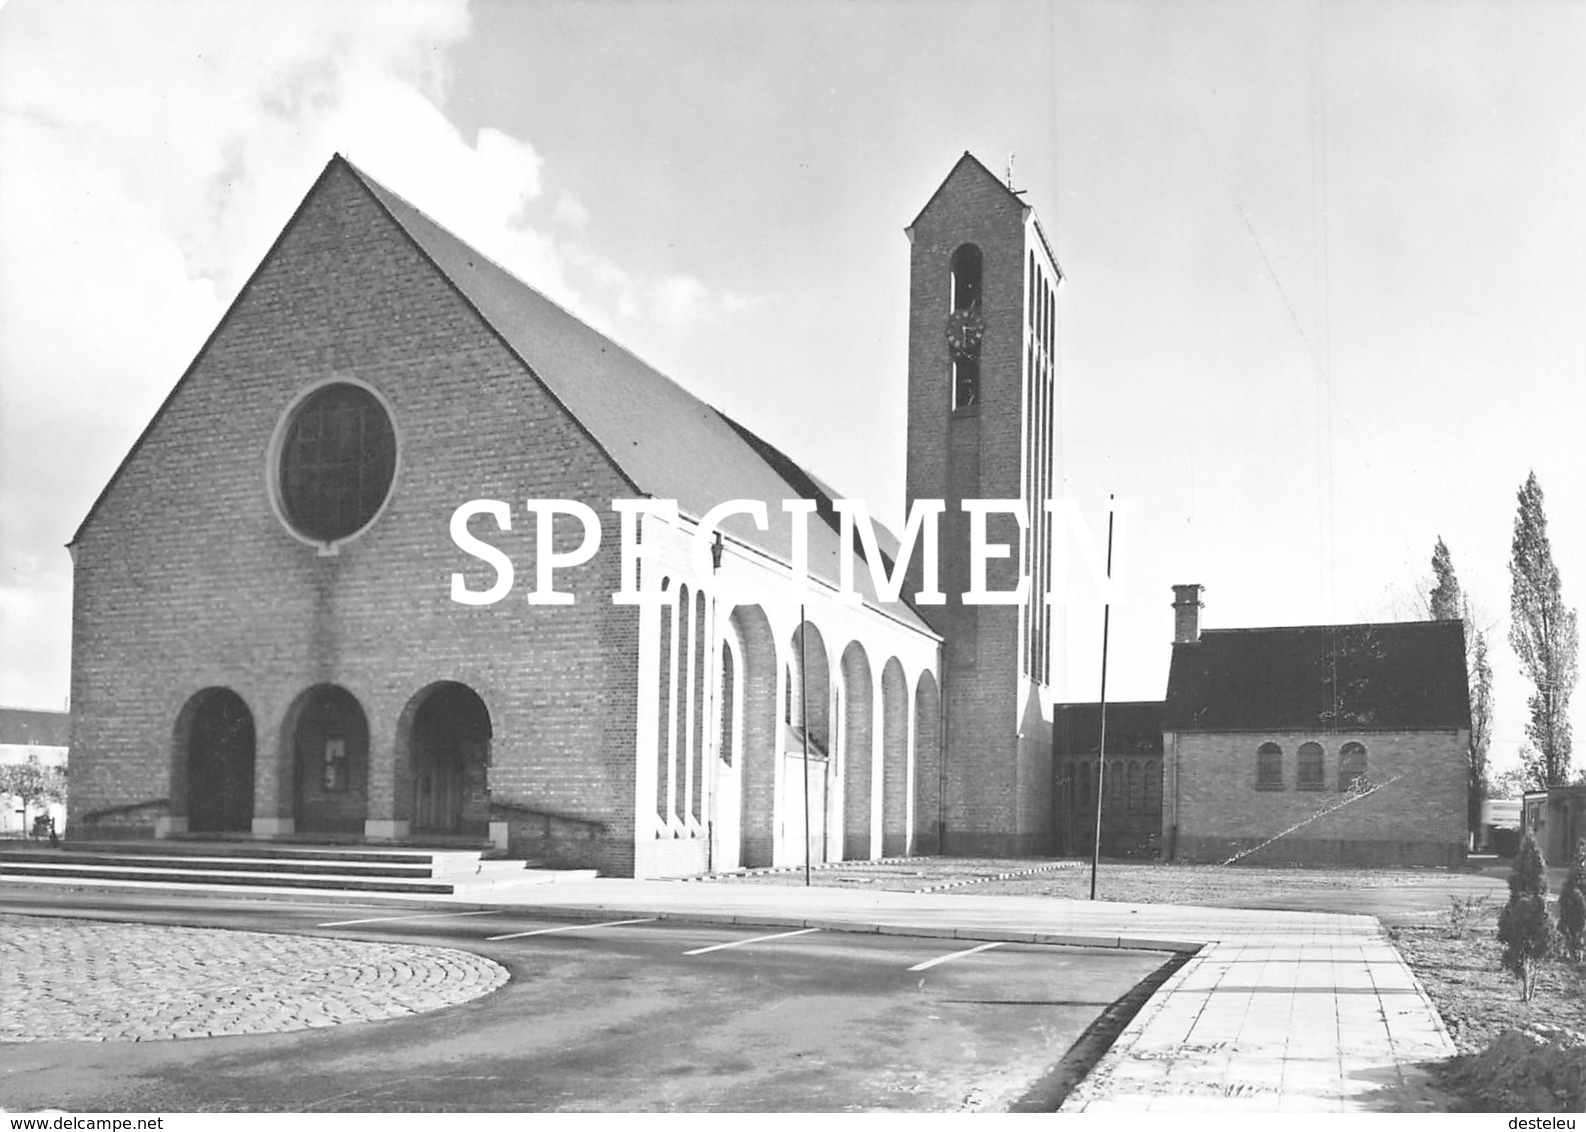 St-Godelieve Kerk - Ruddervoorde (glanzend) - Oostkamp